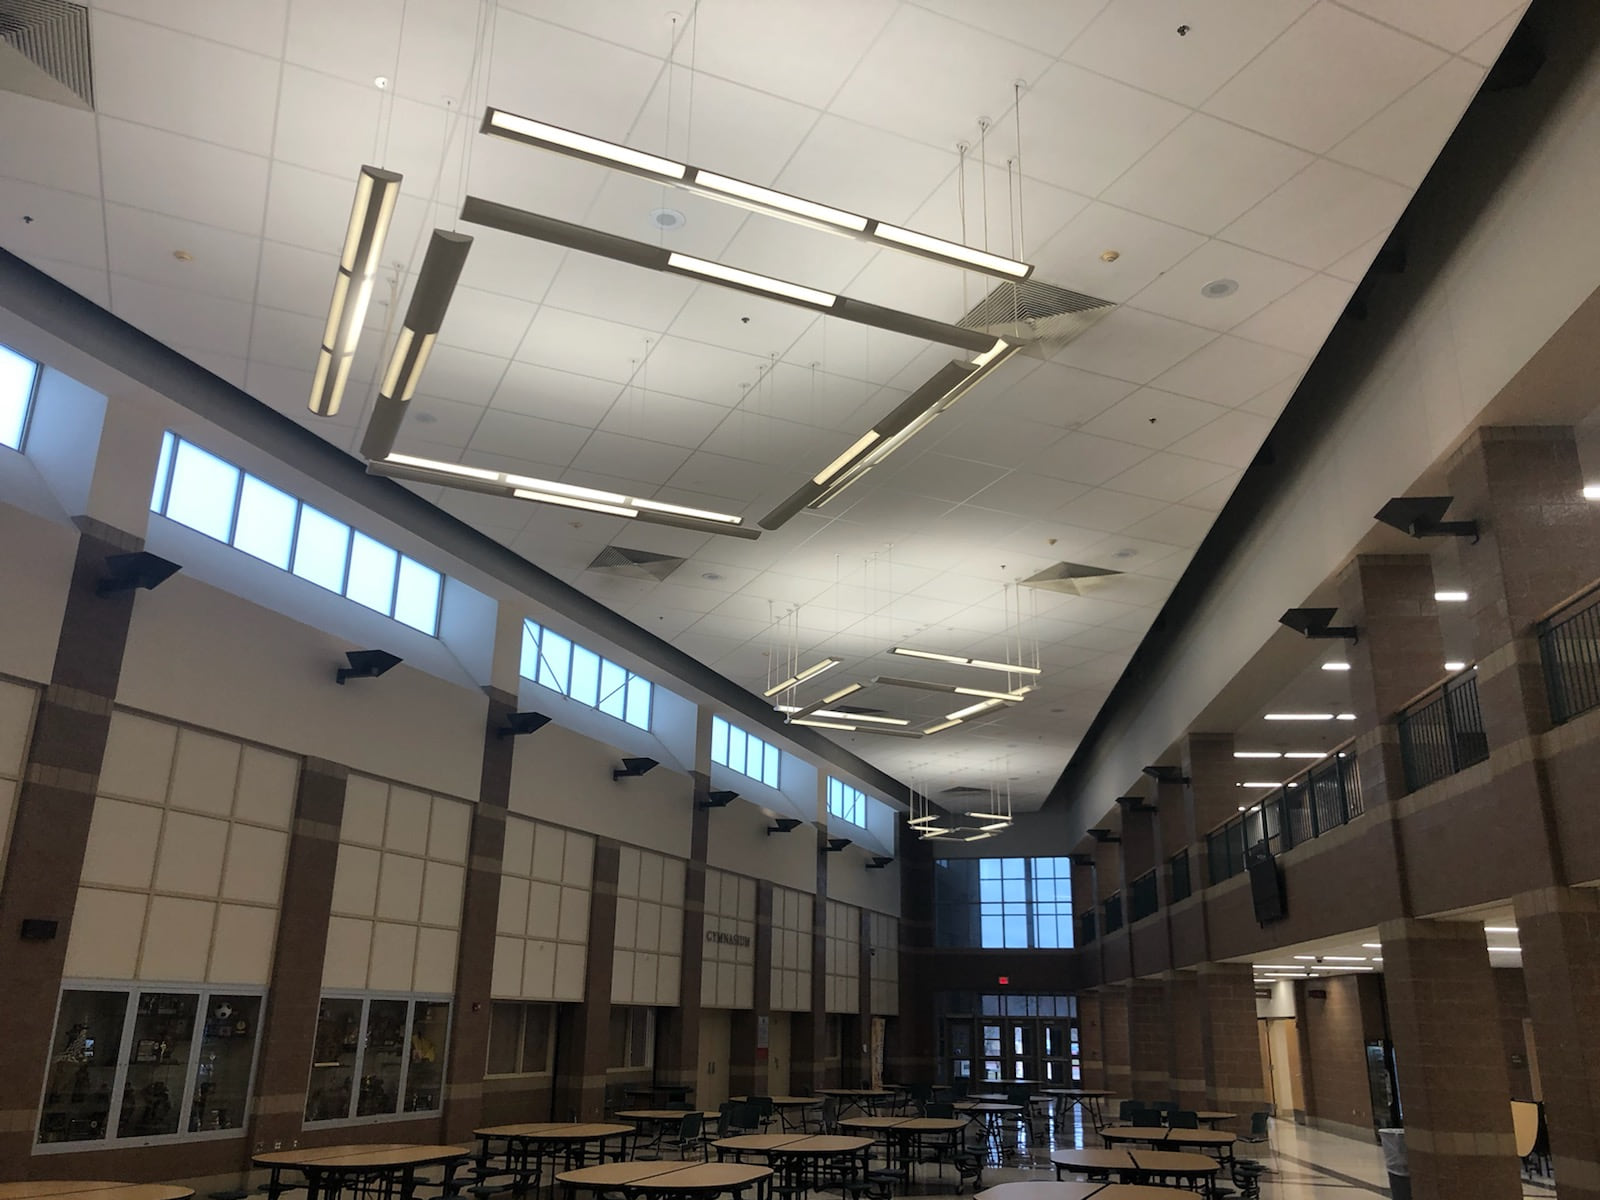 Holt Schools lighting